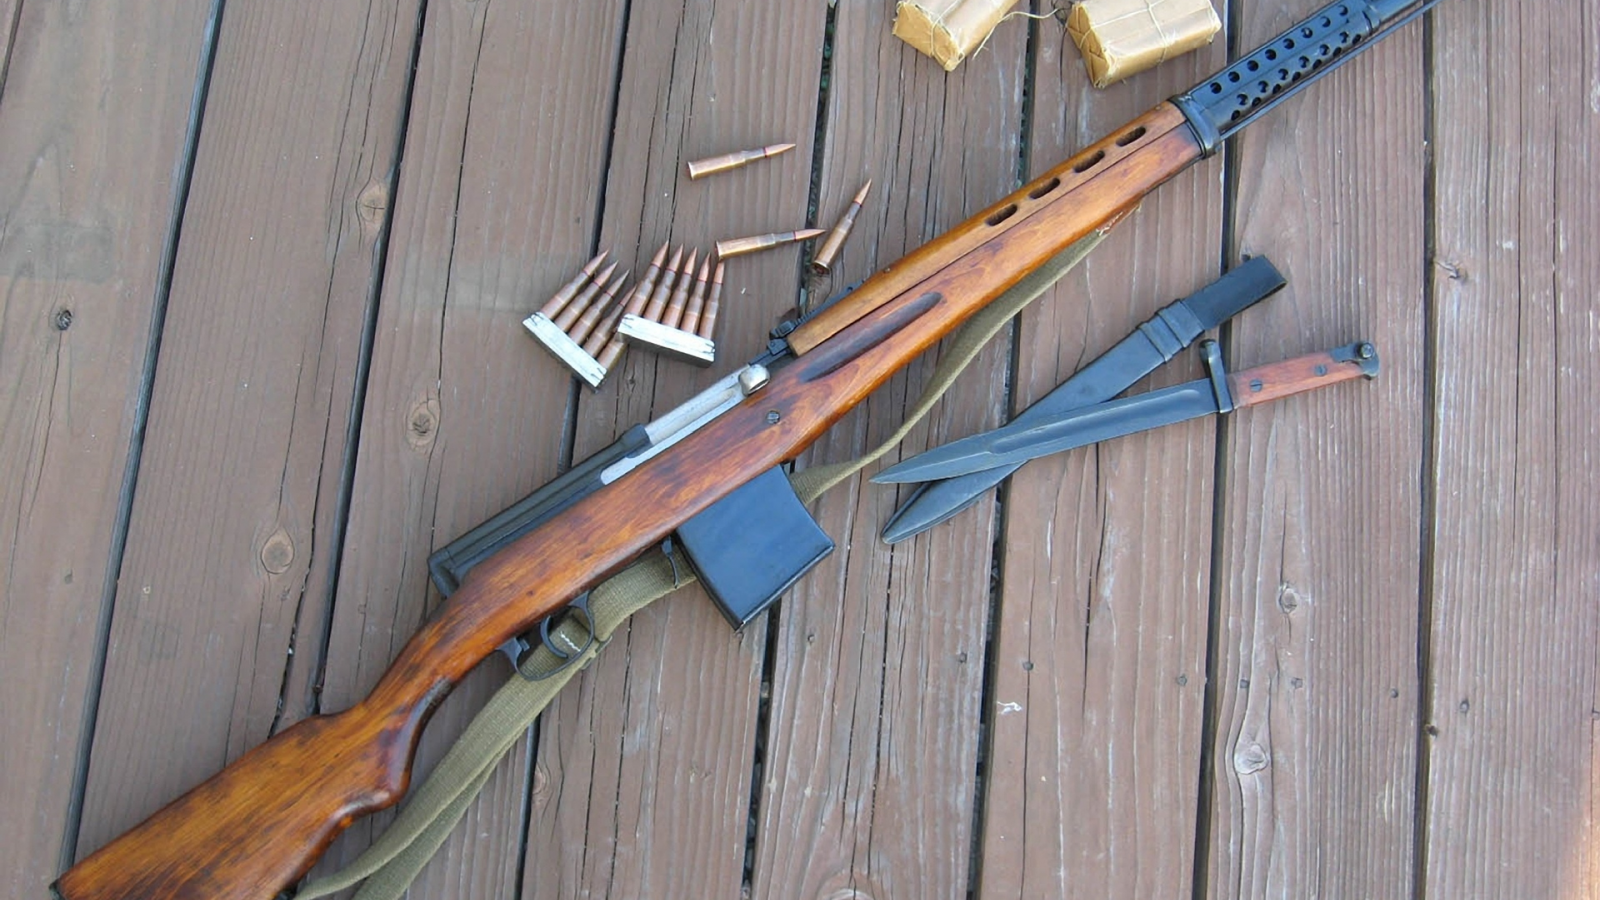 самозарядная винтовка токарева, доски, патроны, свт-40